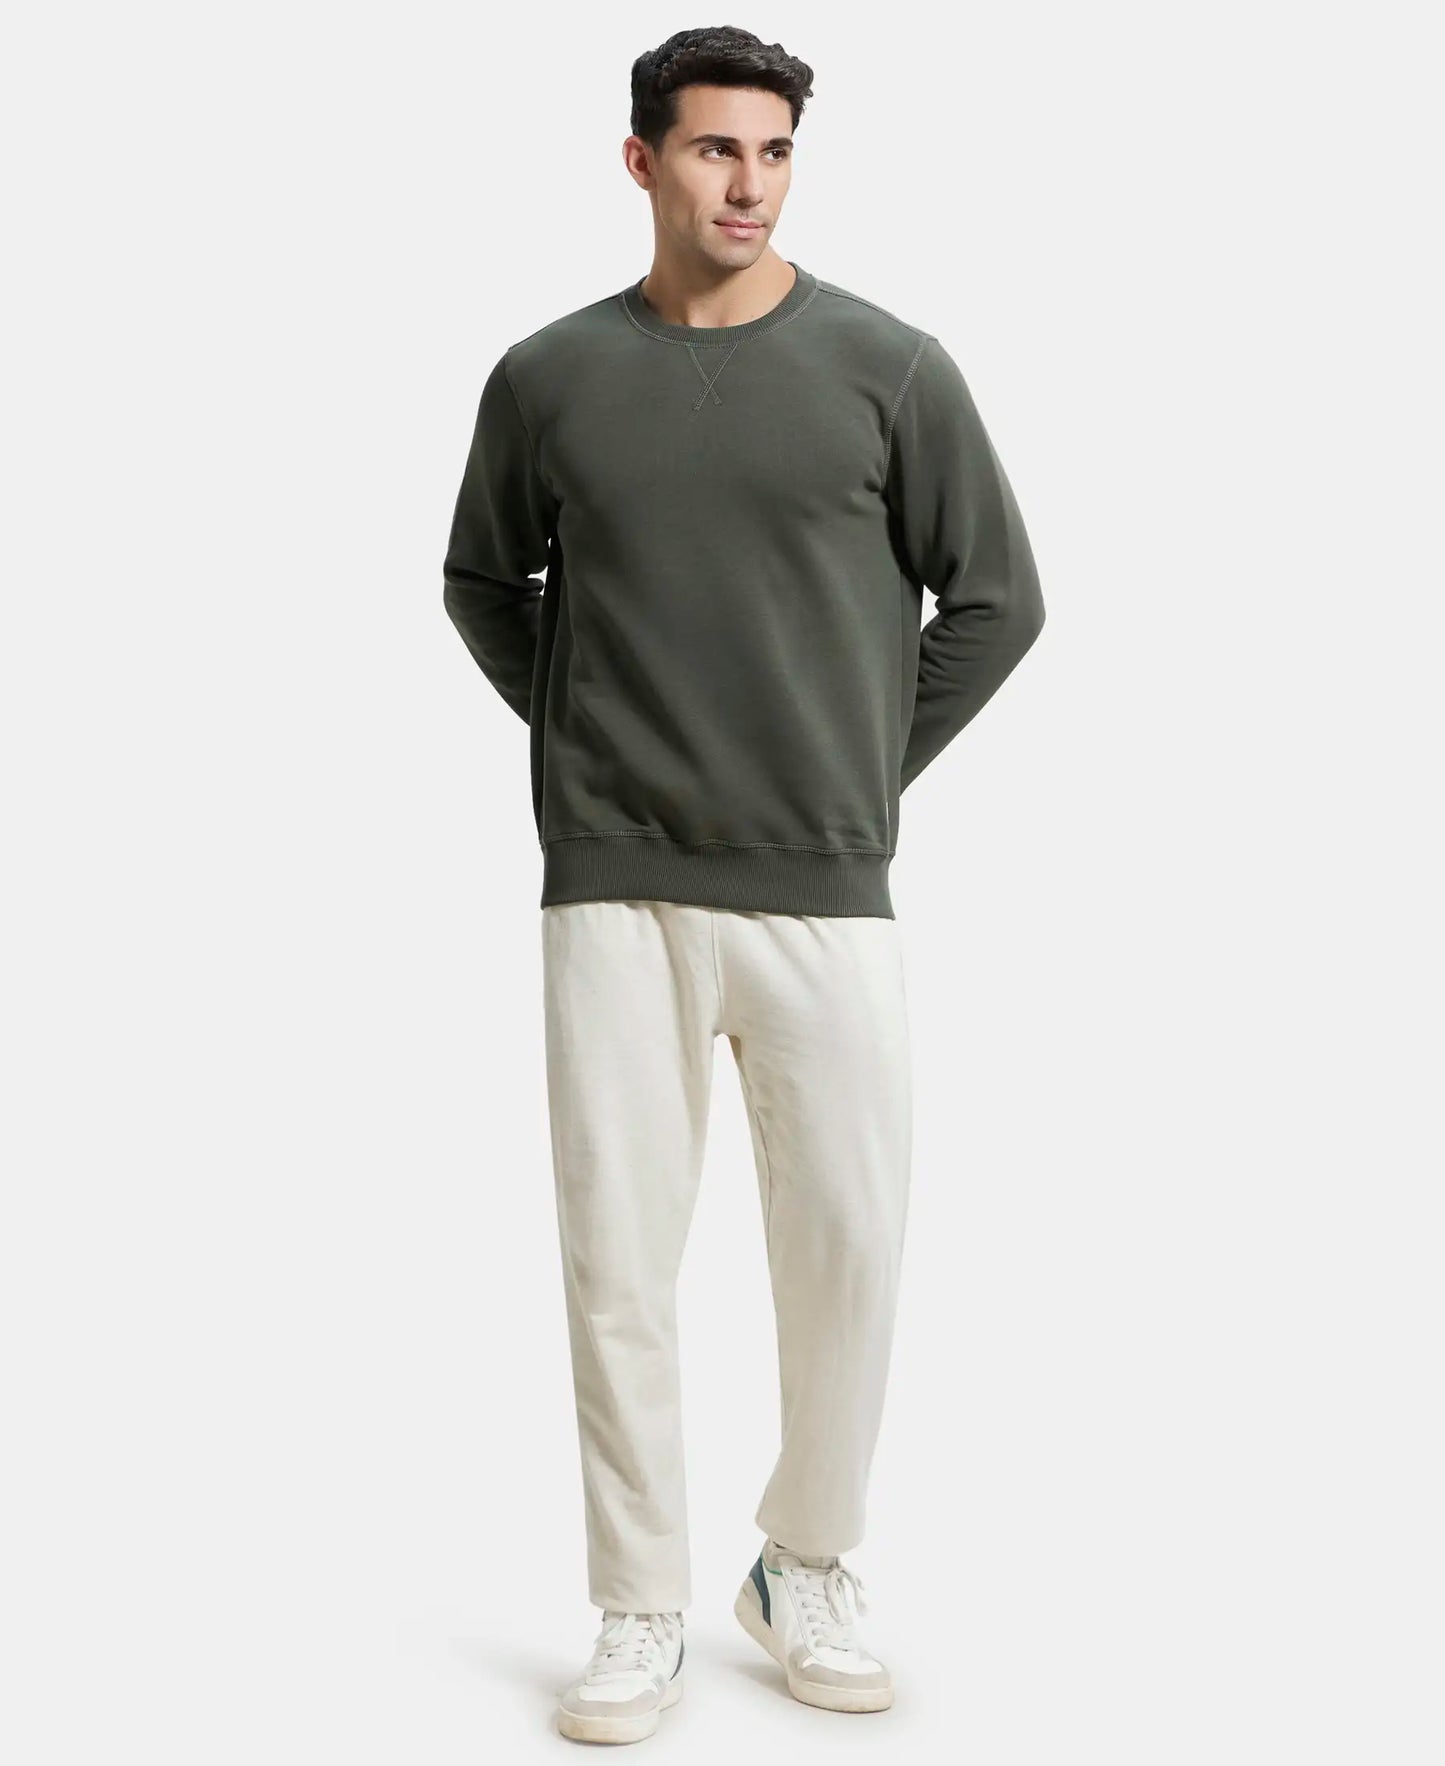 Super Combed Cotton Rich Fleece Sweatshirt with StayWarm Technology - Deep Olive-4